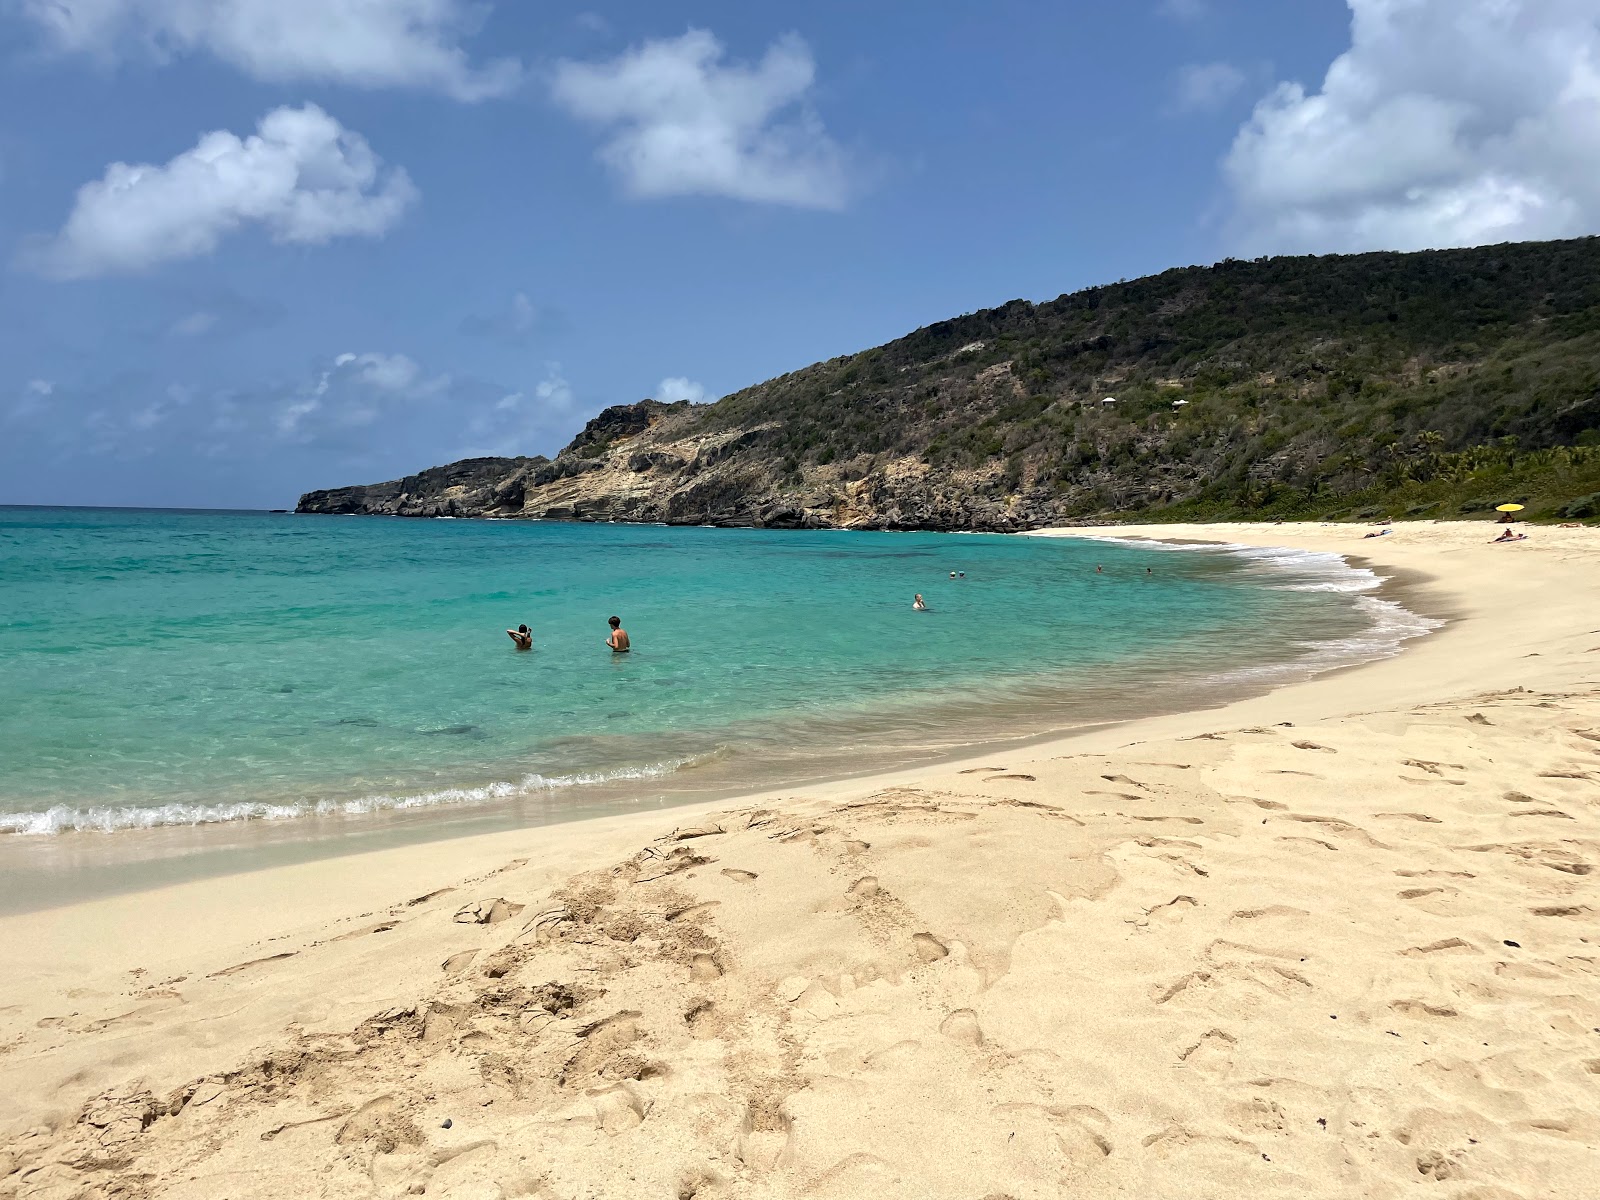 Foto di Gouverneur beach ubicato in zona naturale